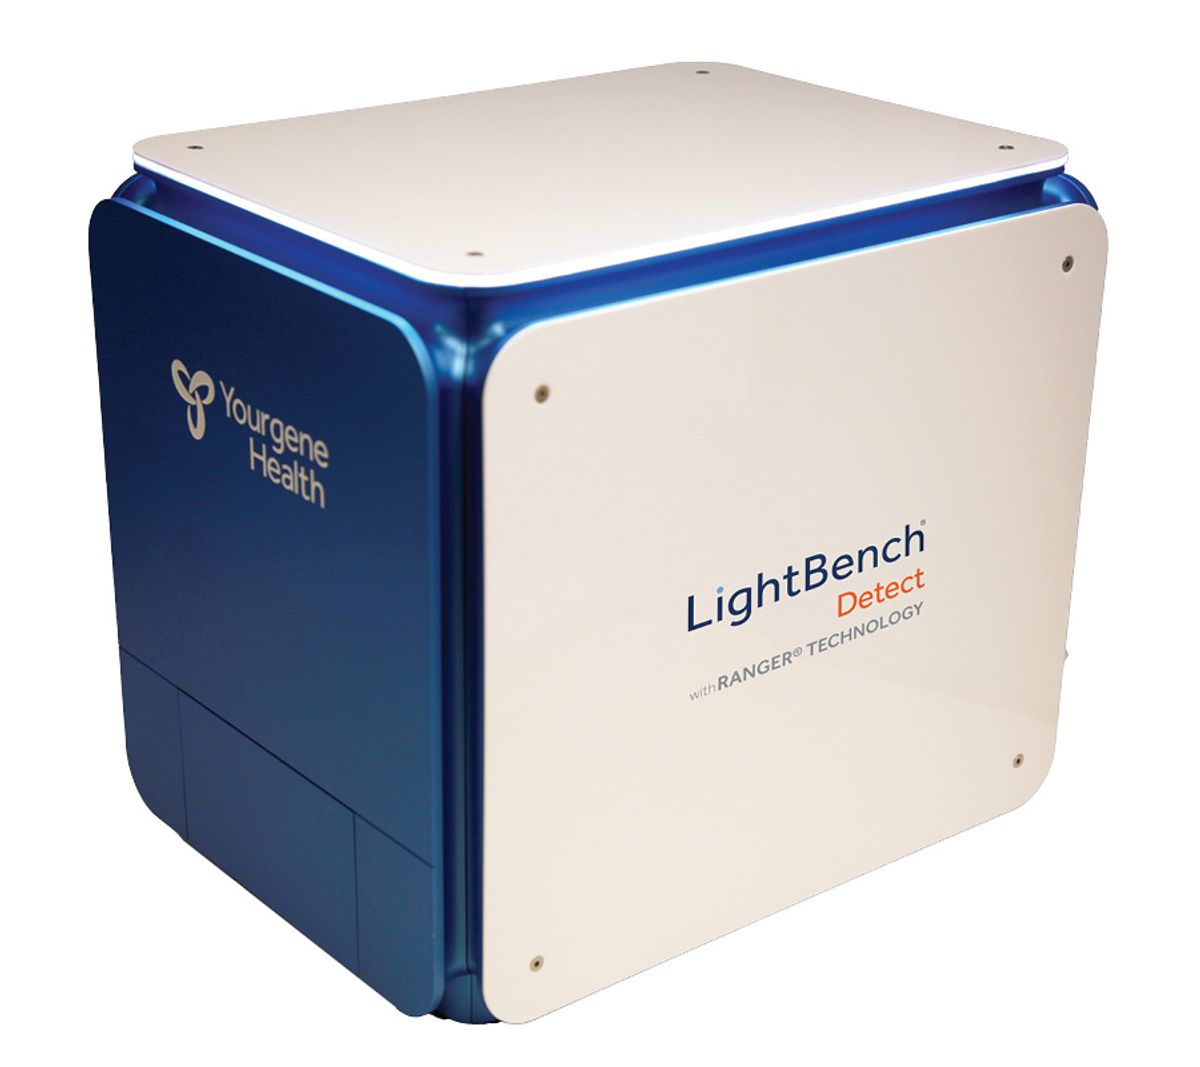 LightBench® Detect
Yourgene Health